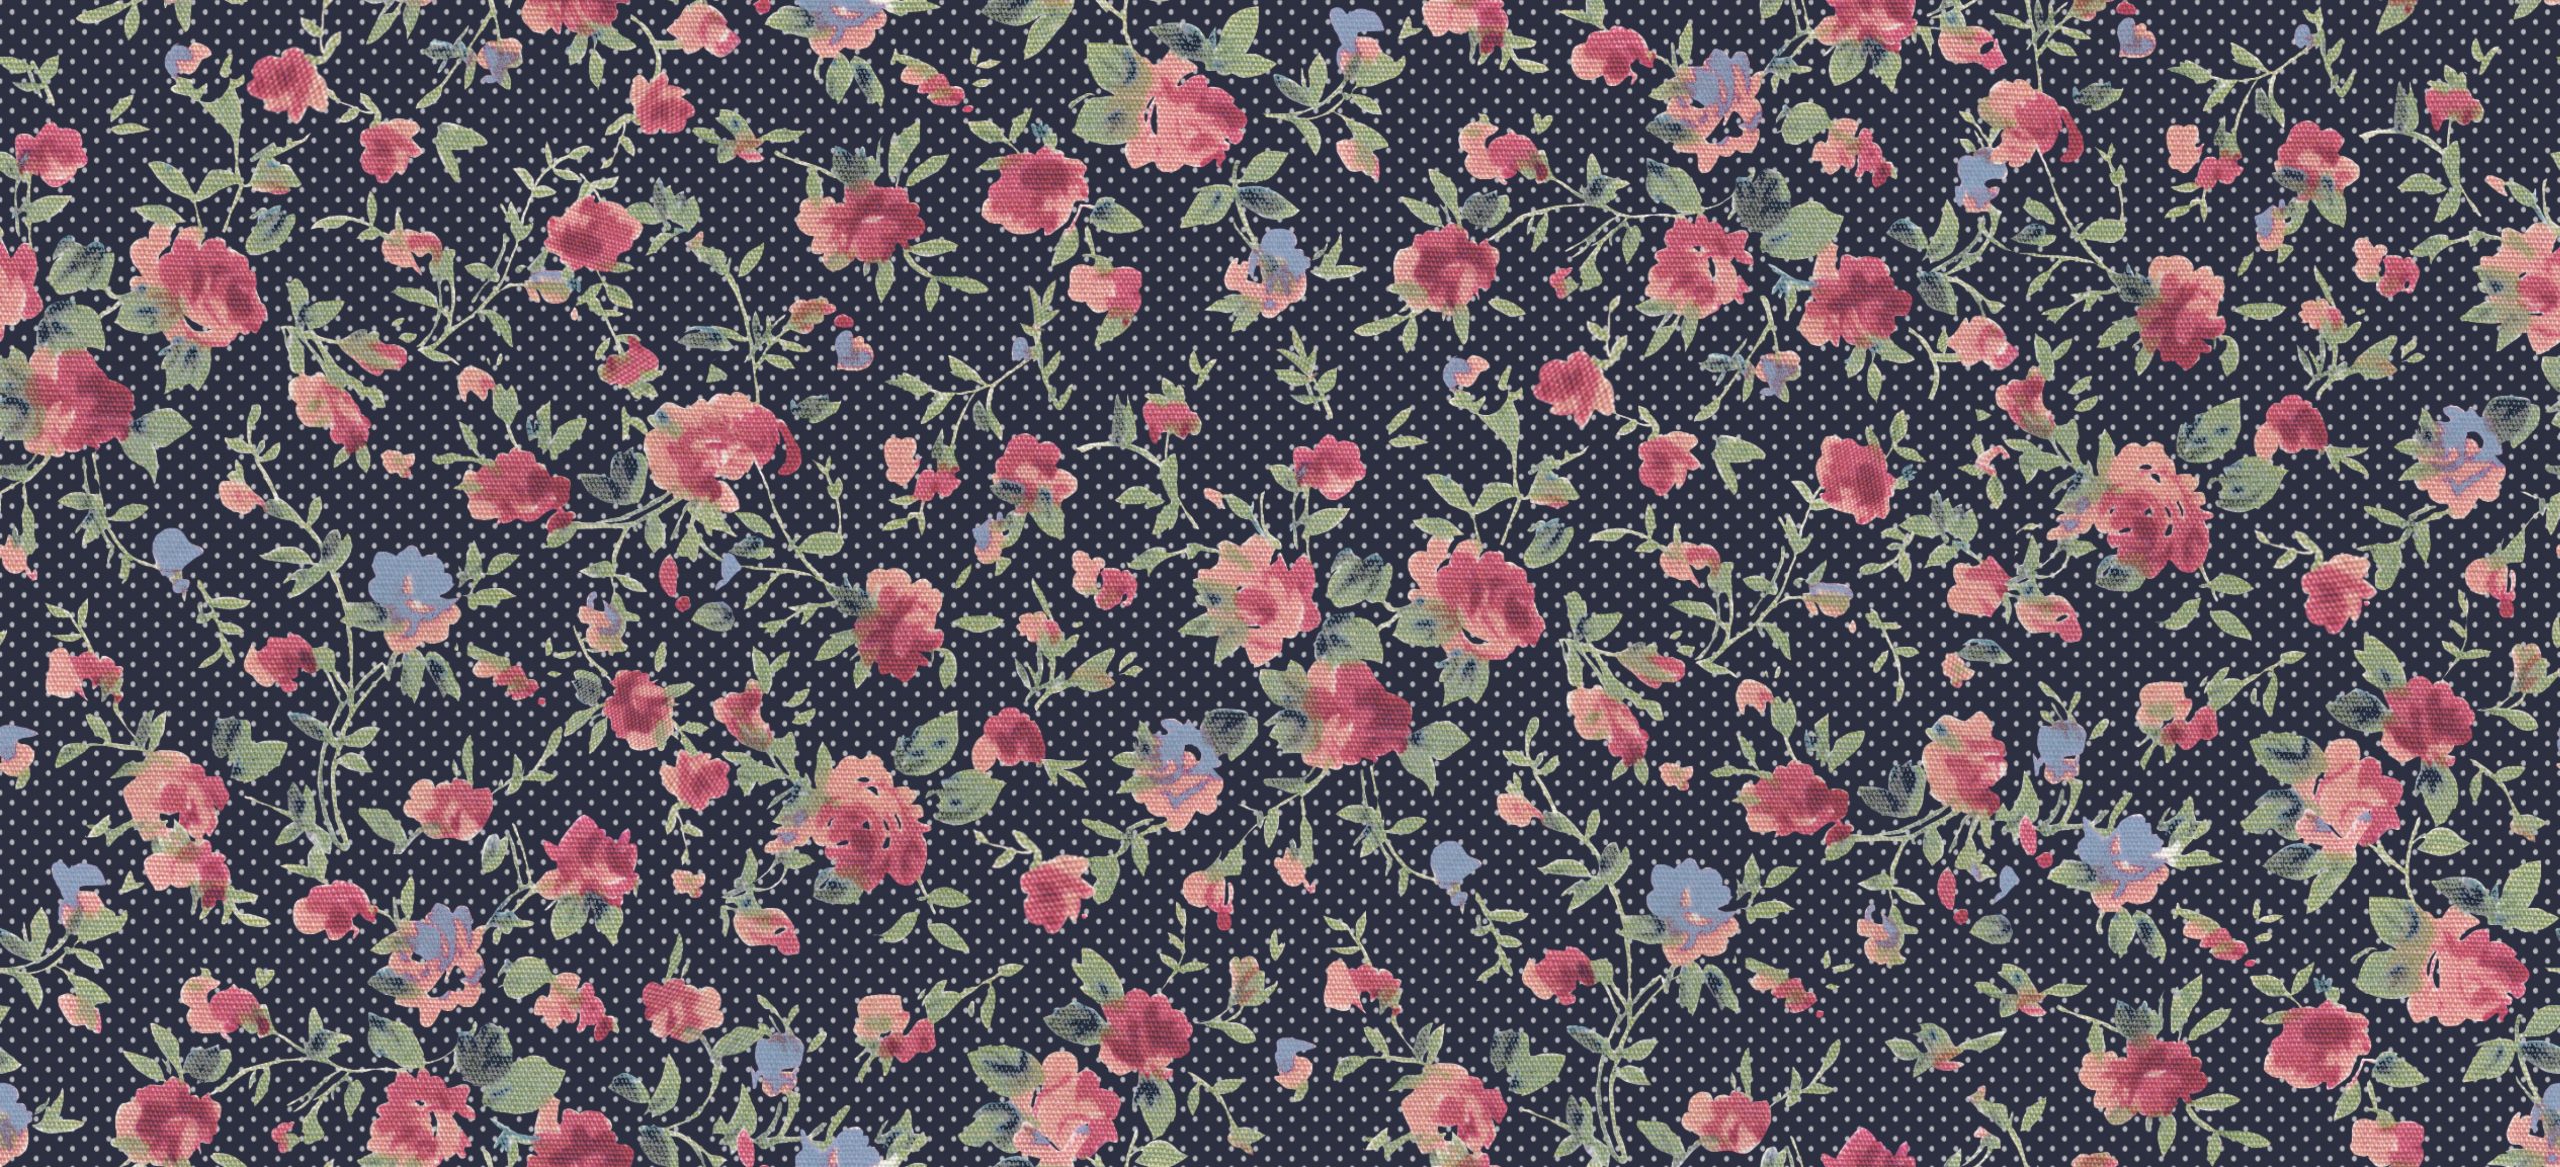 Floral textile wallpaper, pattern, flowers pattern